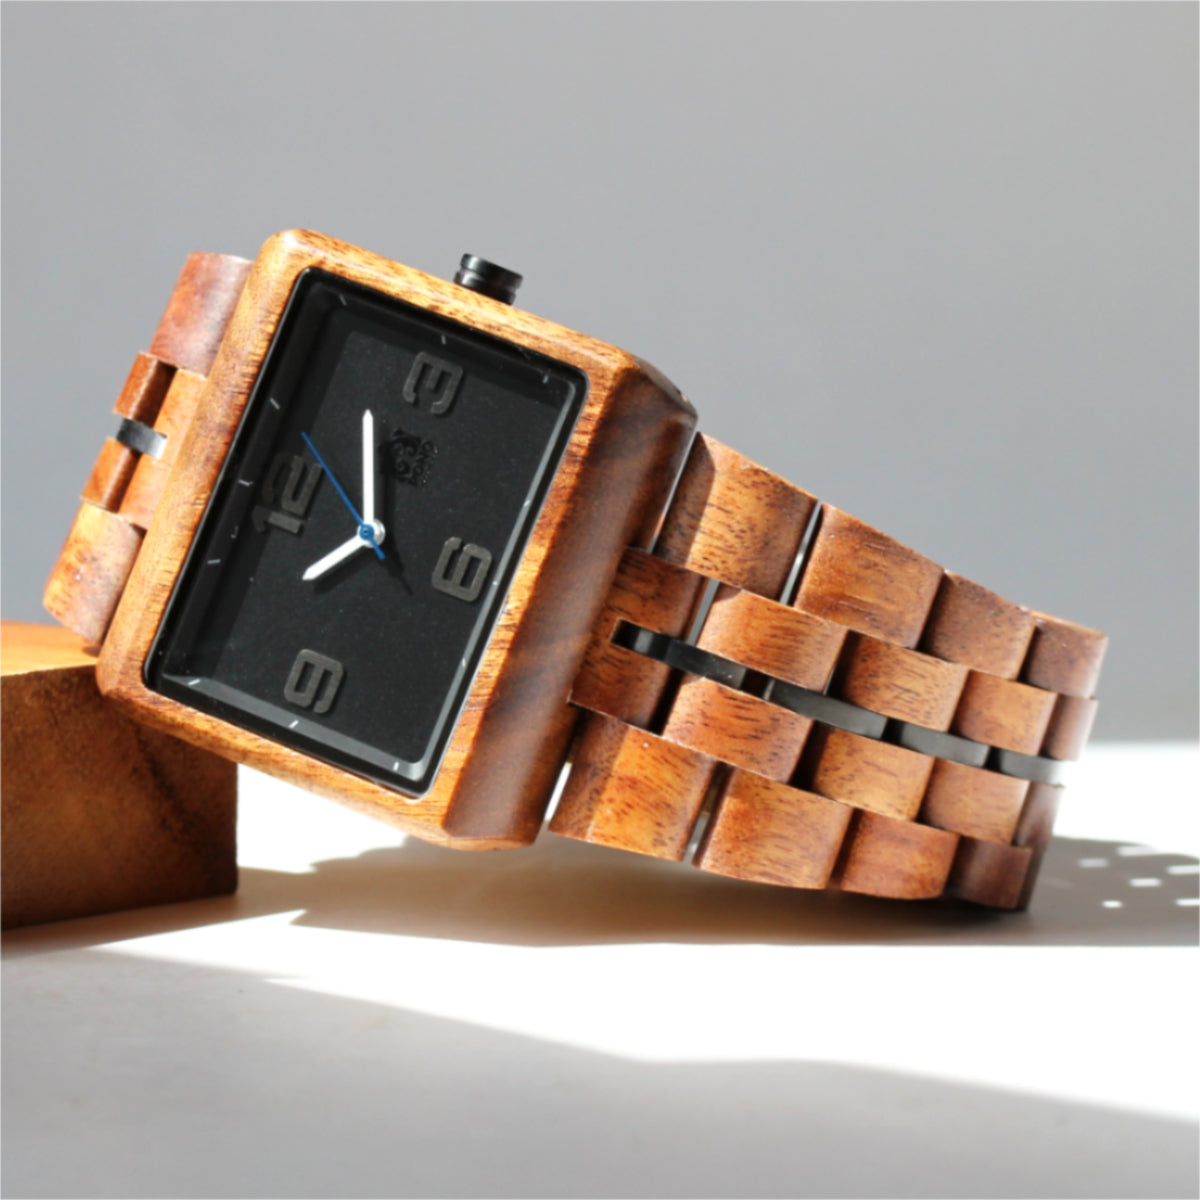 square solid koa wood watch w simple black face leaning against small koa block